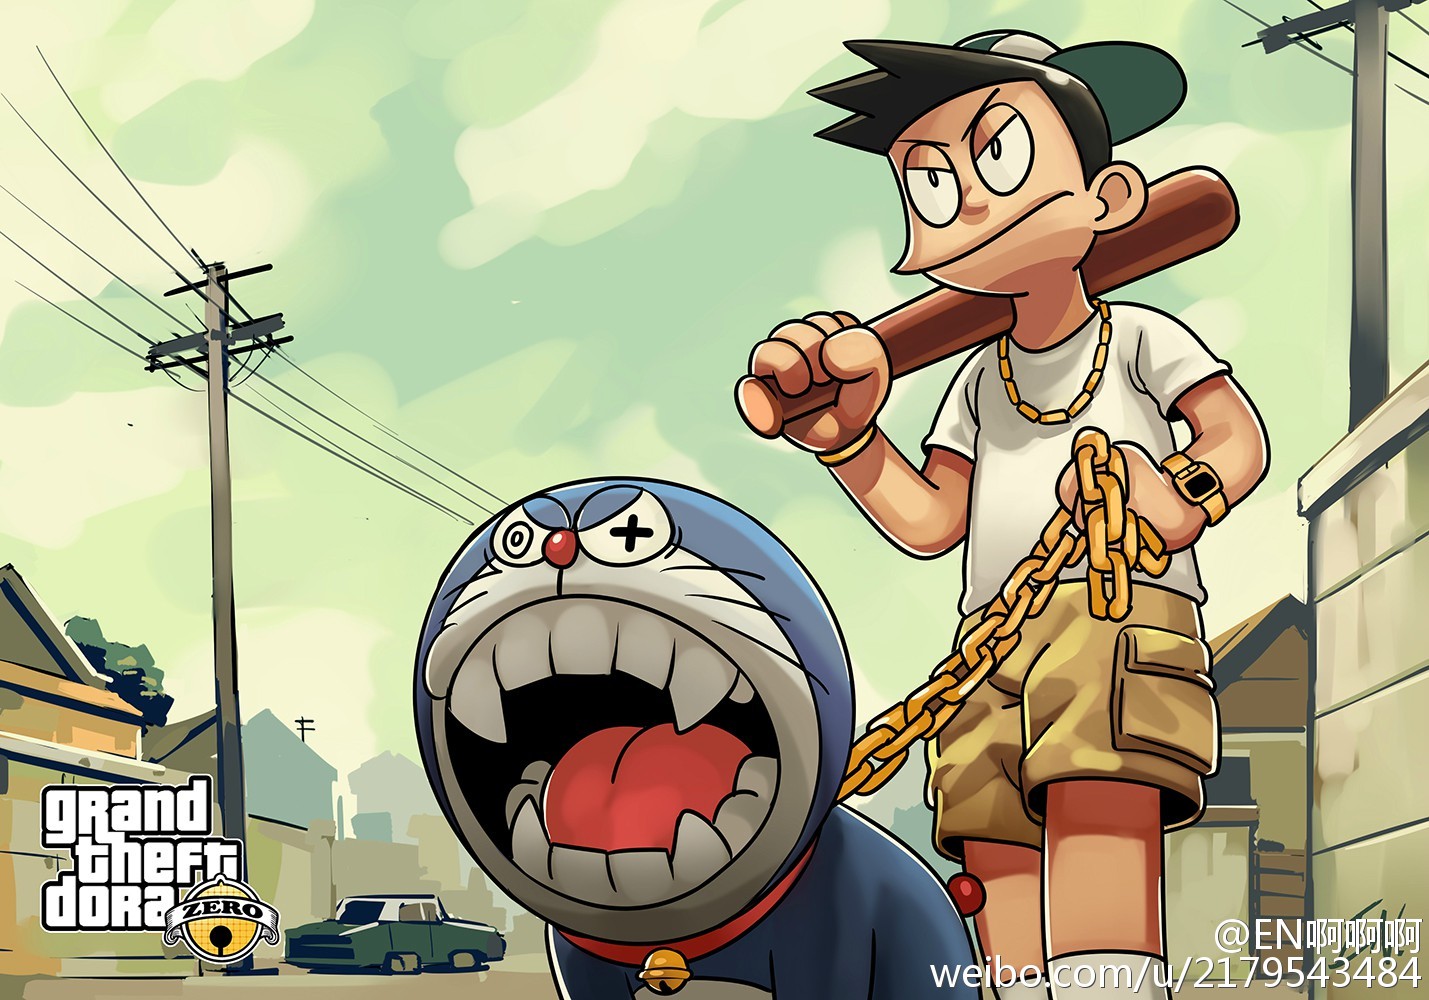 Doraemon Grand Theft Auto Video Game Art | Hypebeast